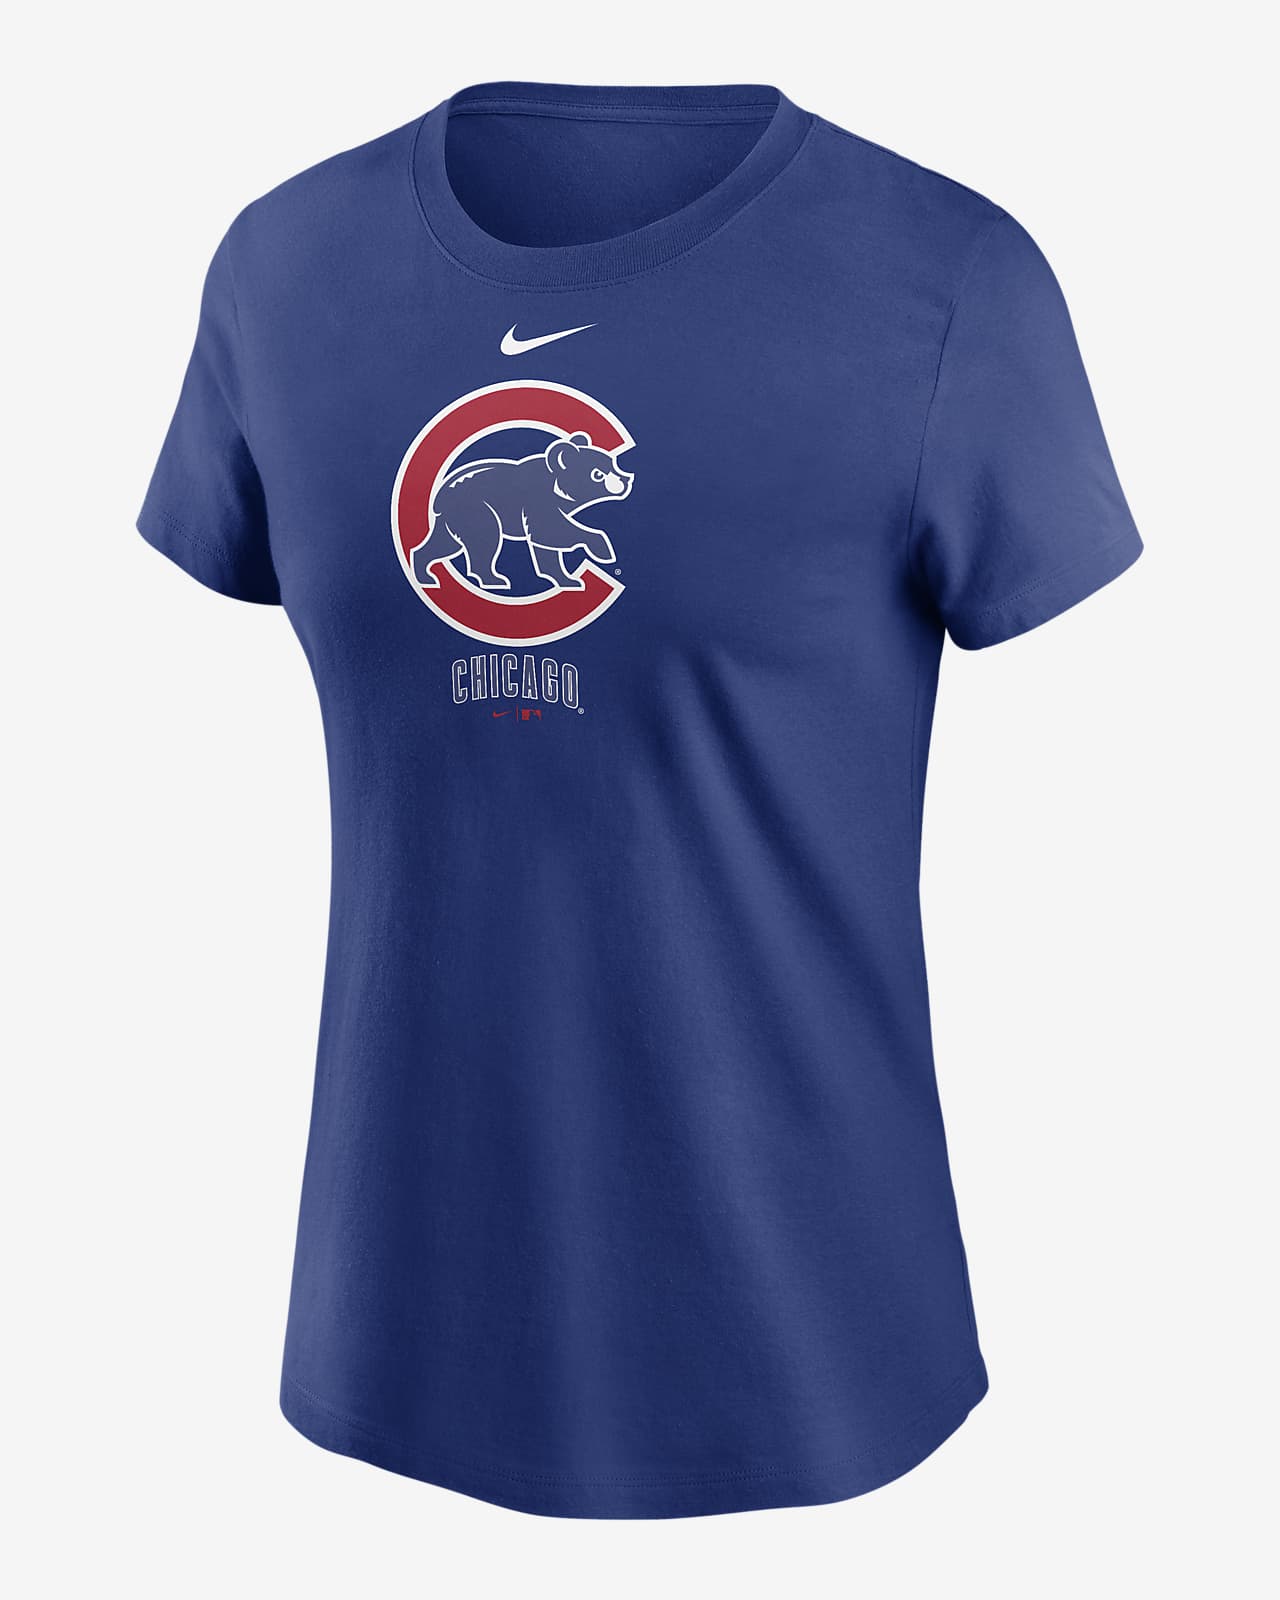 Women's Chicago Cubs Shirts